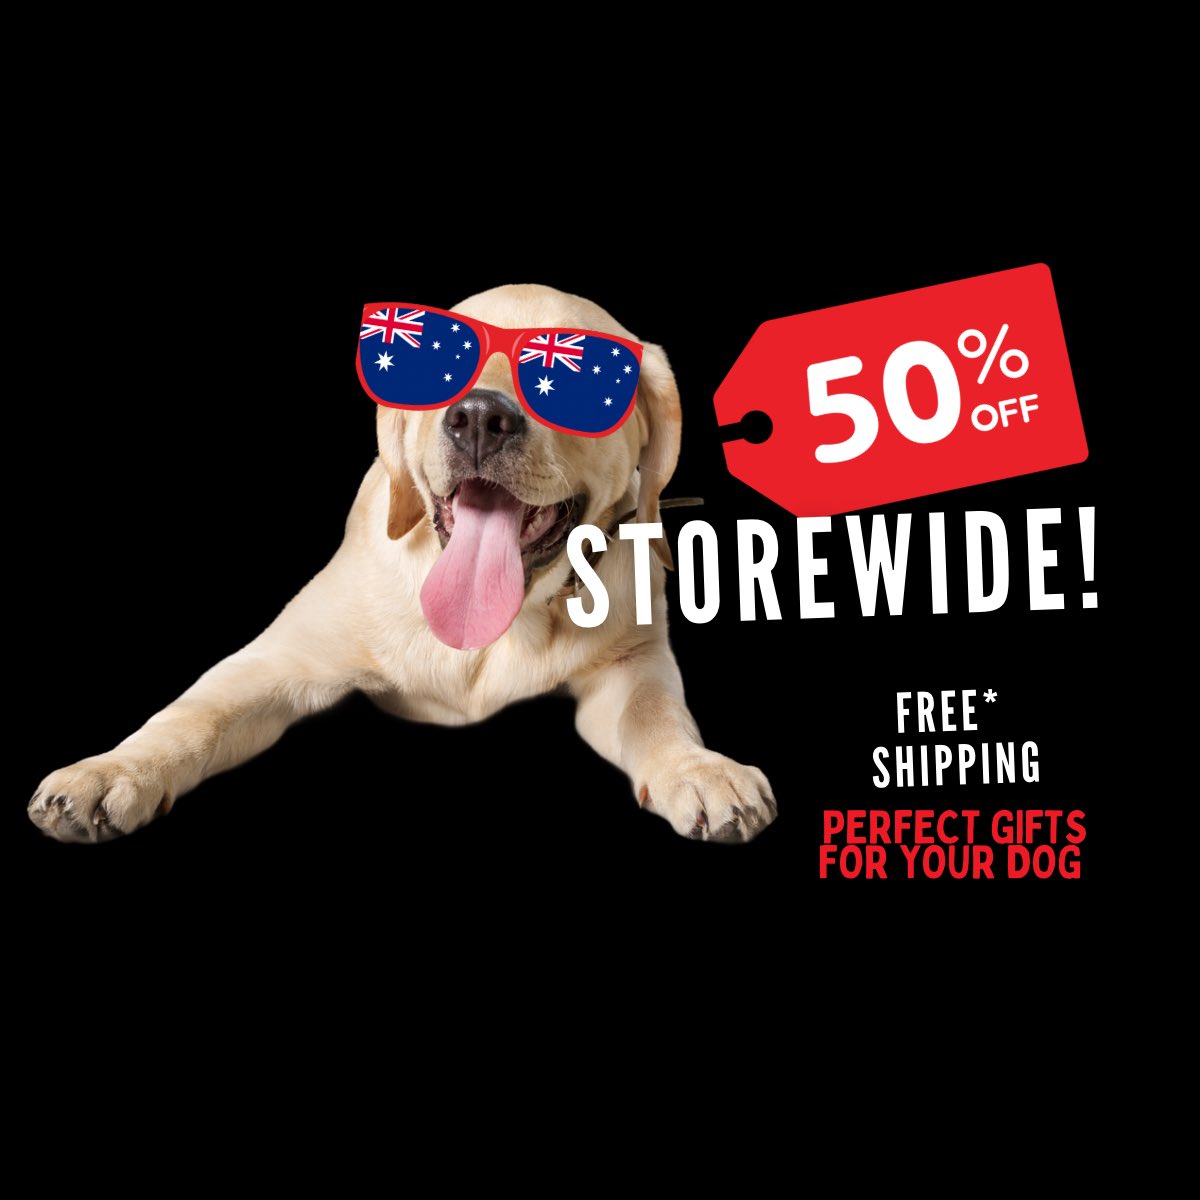 Happy Australia 🇦🇺 Day. 50 % off Storewide, Free Shipping on orders over $39. 
primalpetgear.com.au 
-
#australiaday #doglovers #doggie #dogsofaustralia #lovemydog #mydog #pets #primalpetgear